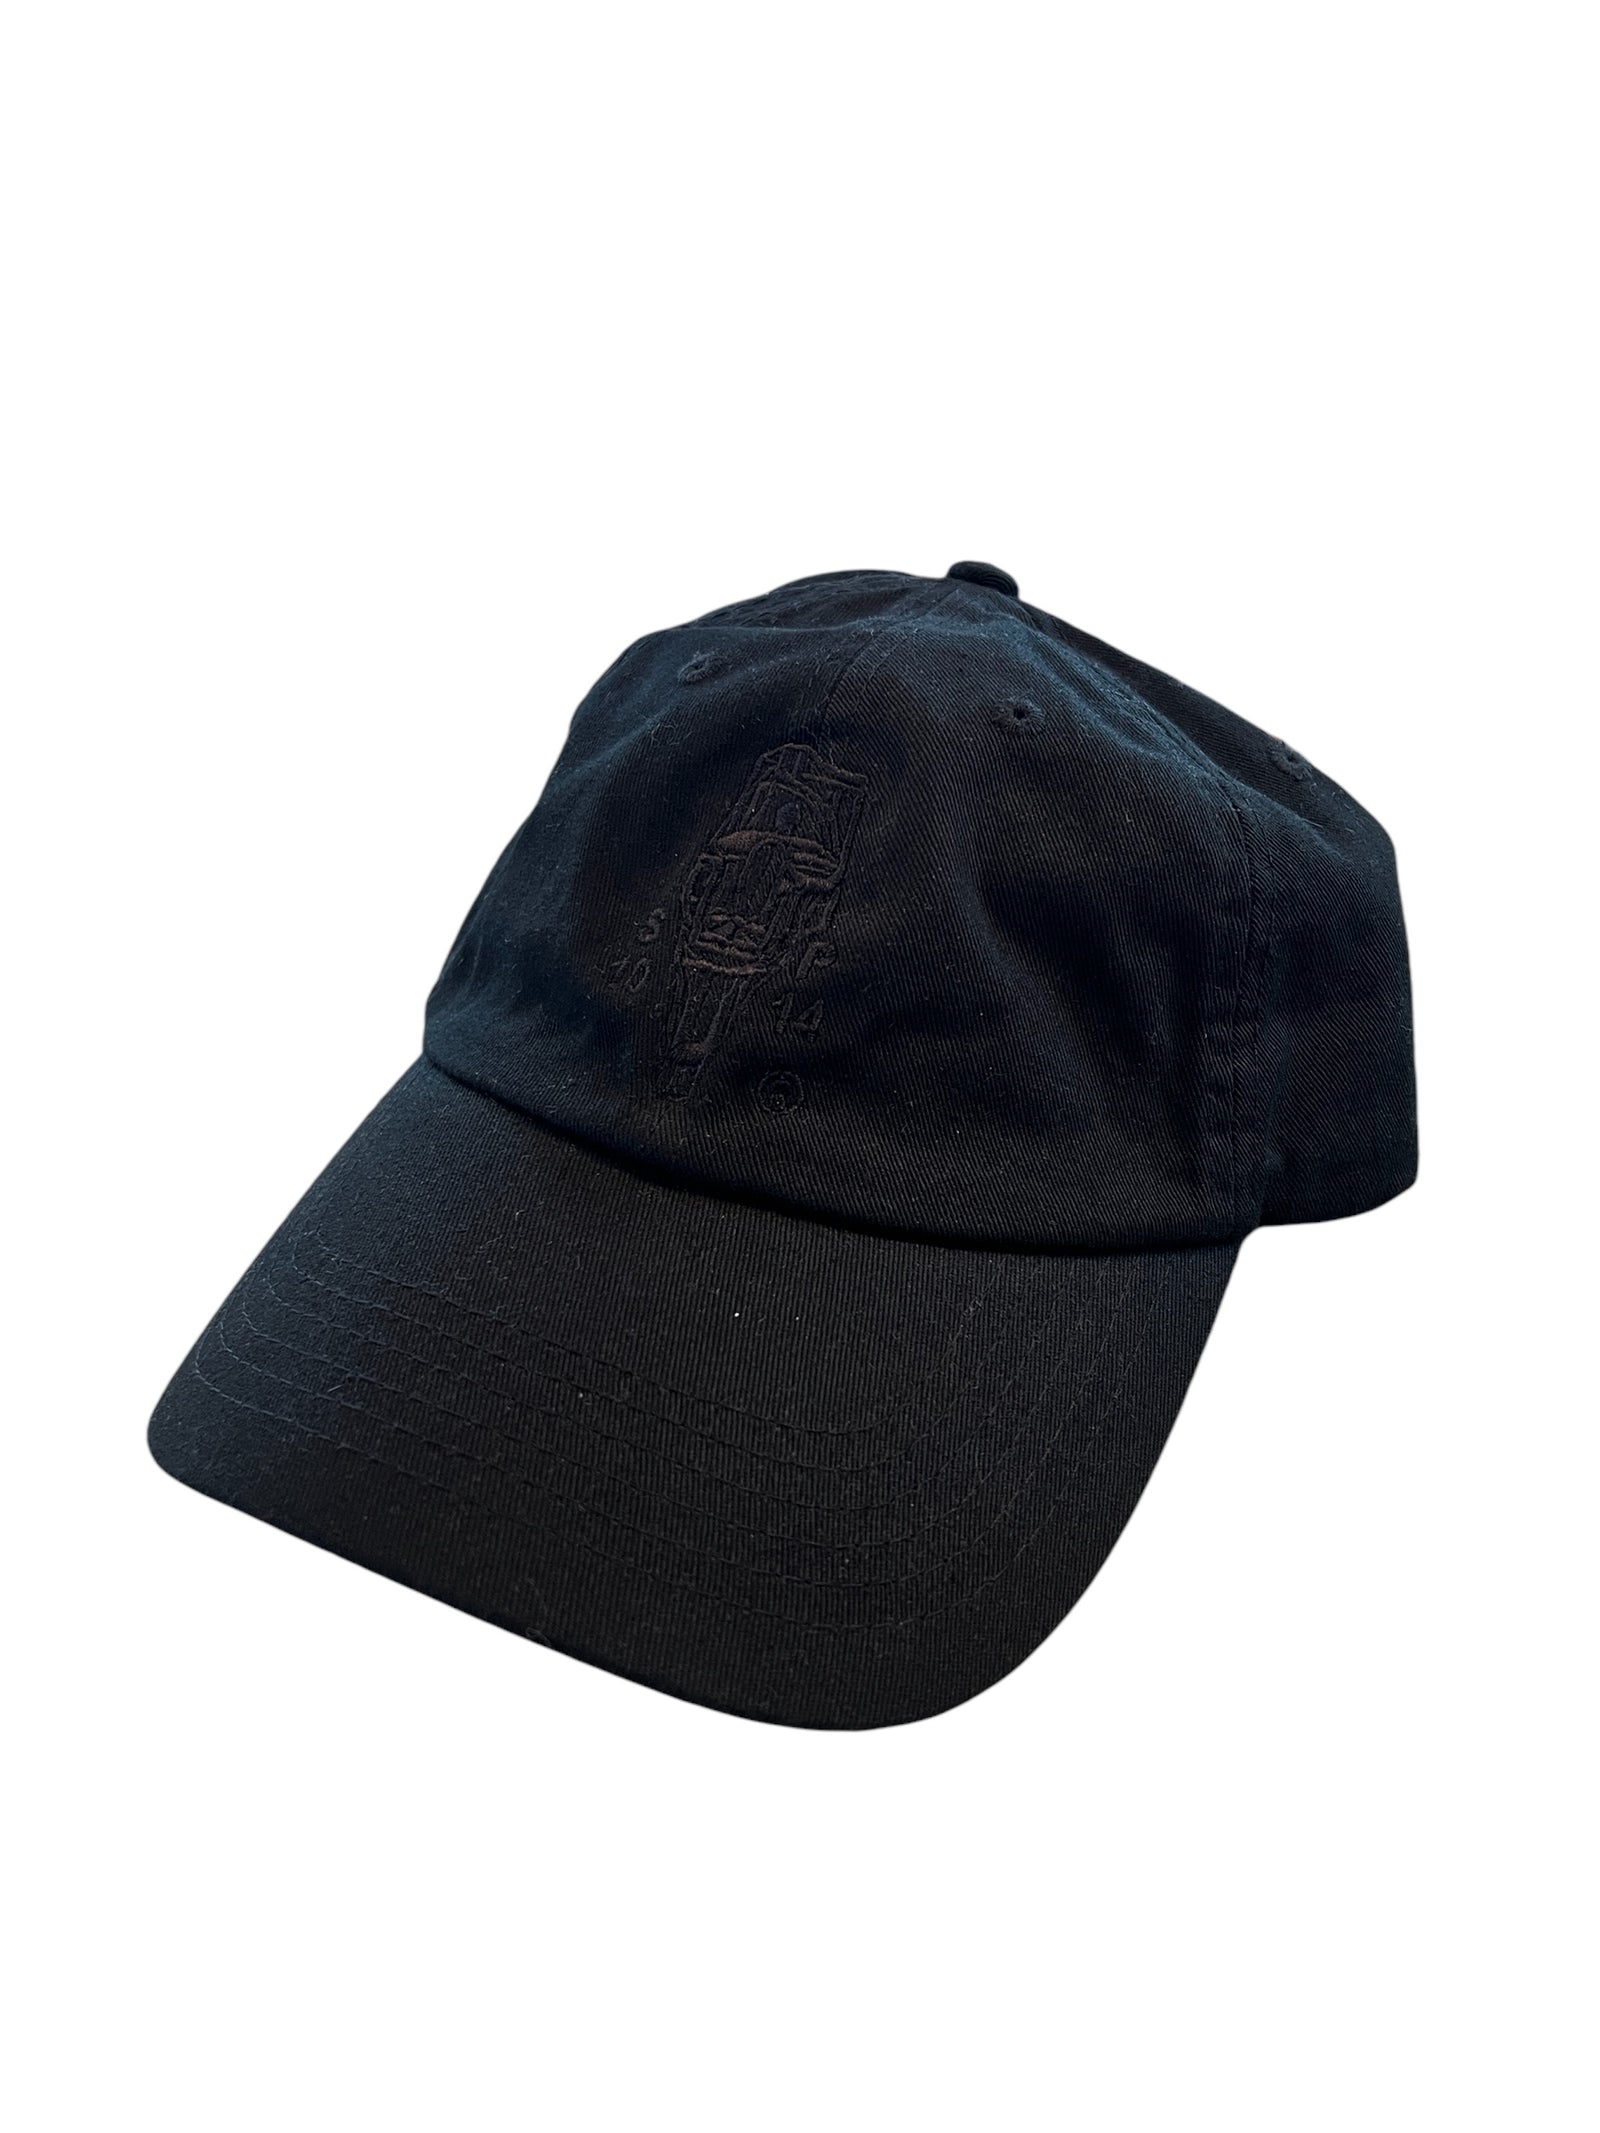 SP 1014 Adjustable Hat